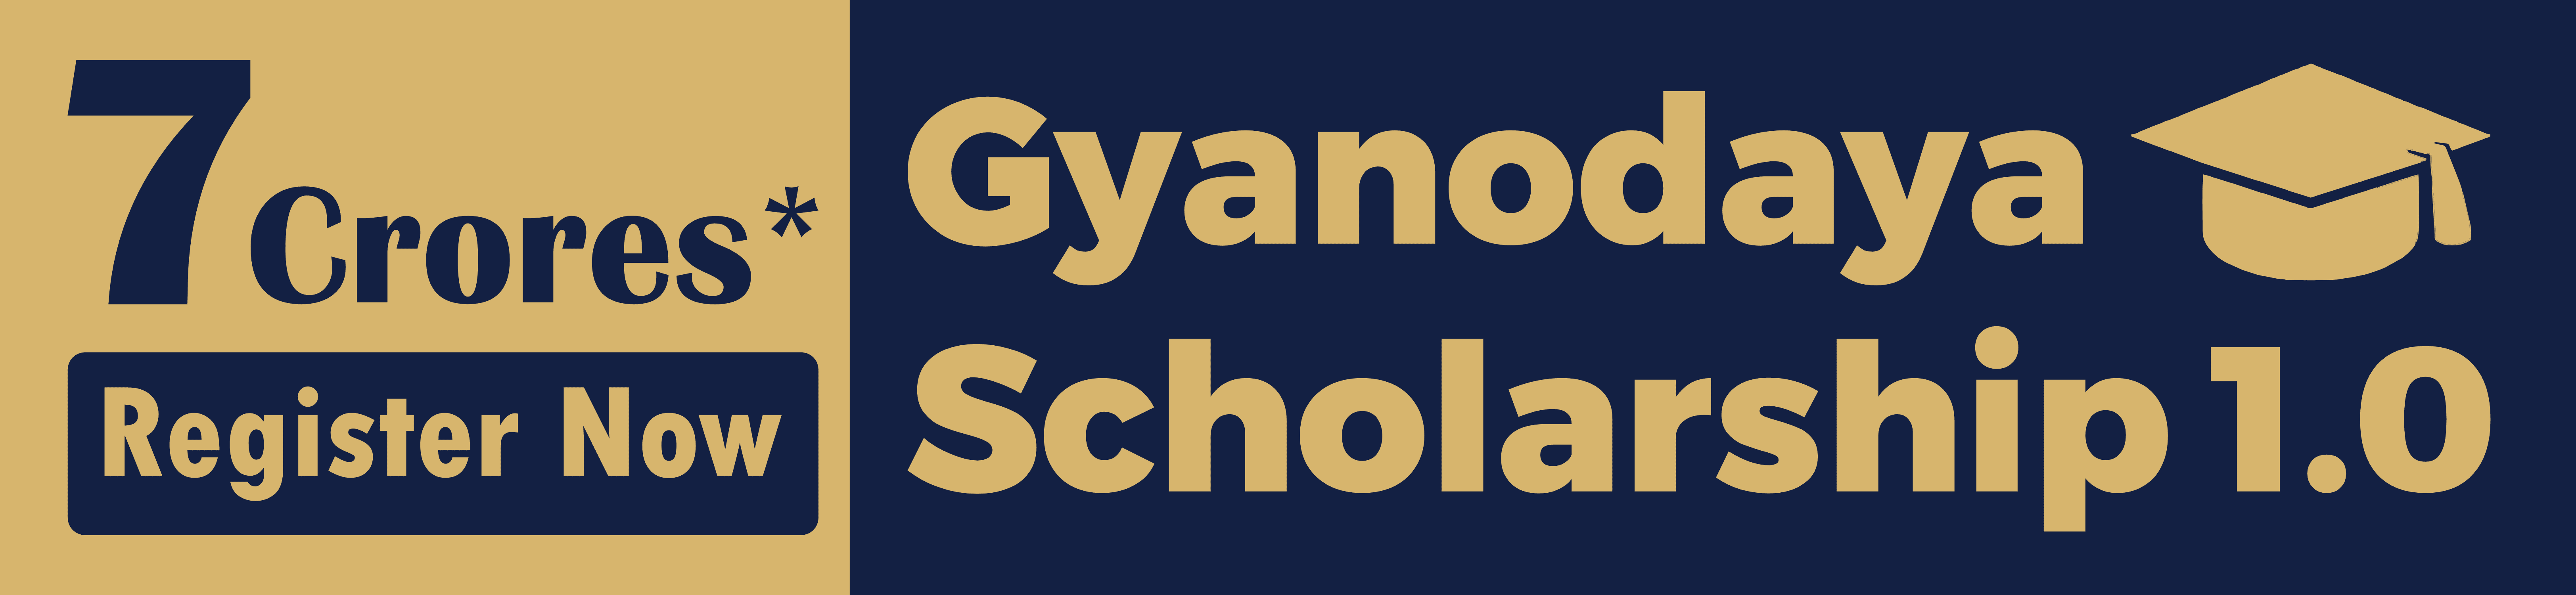 Gyanodaya